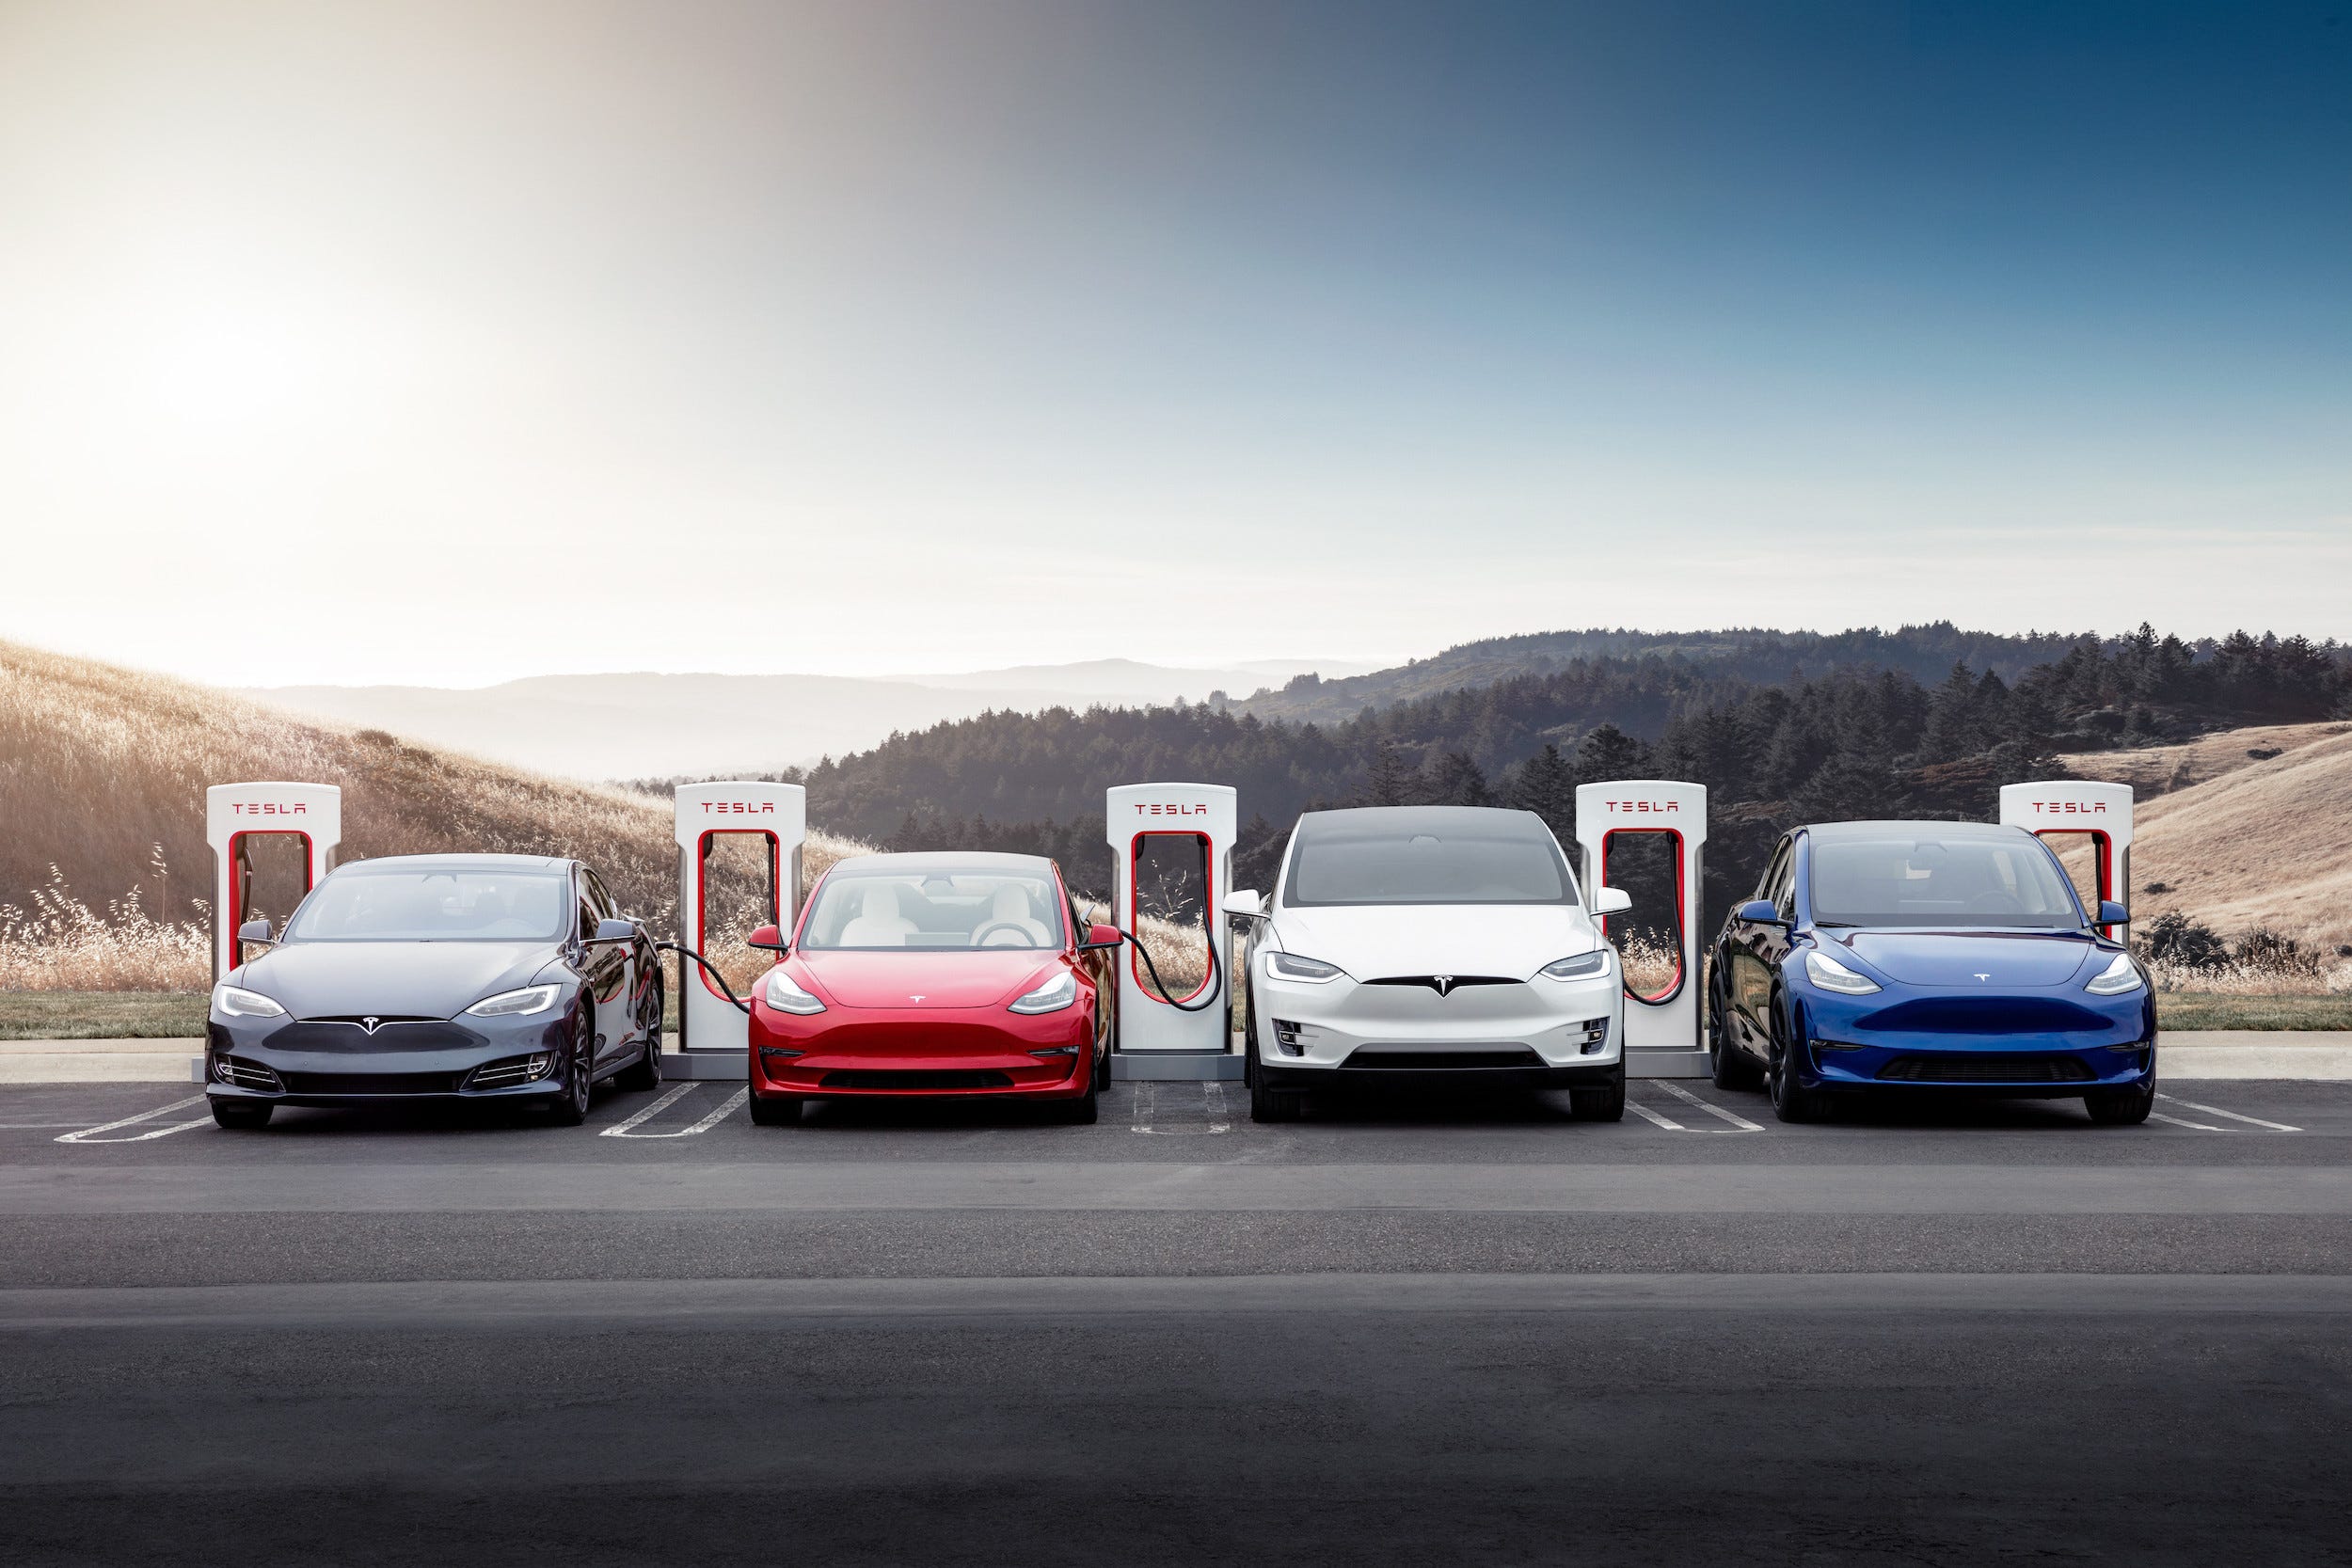 Tesla's huidige auto-aanbod